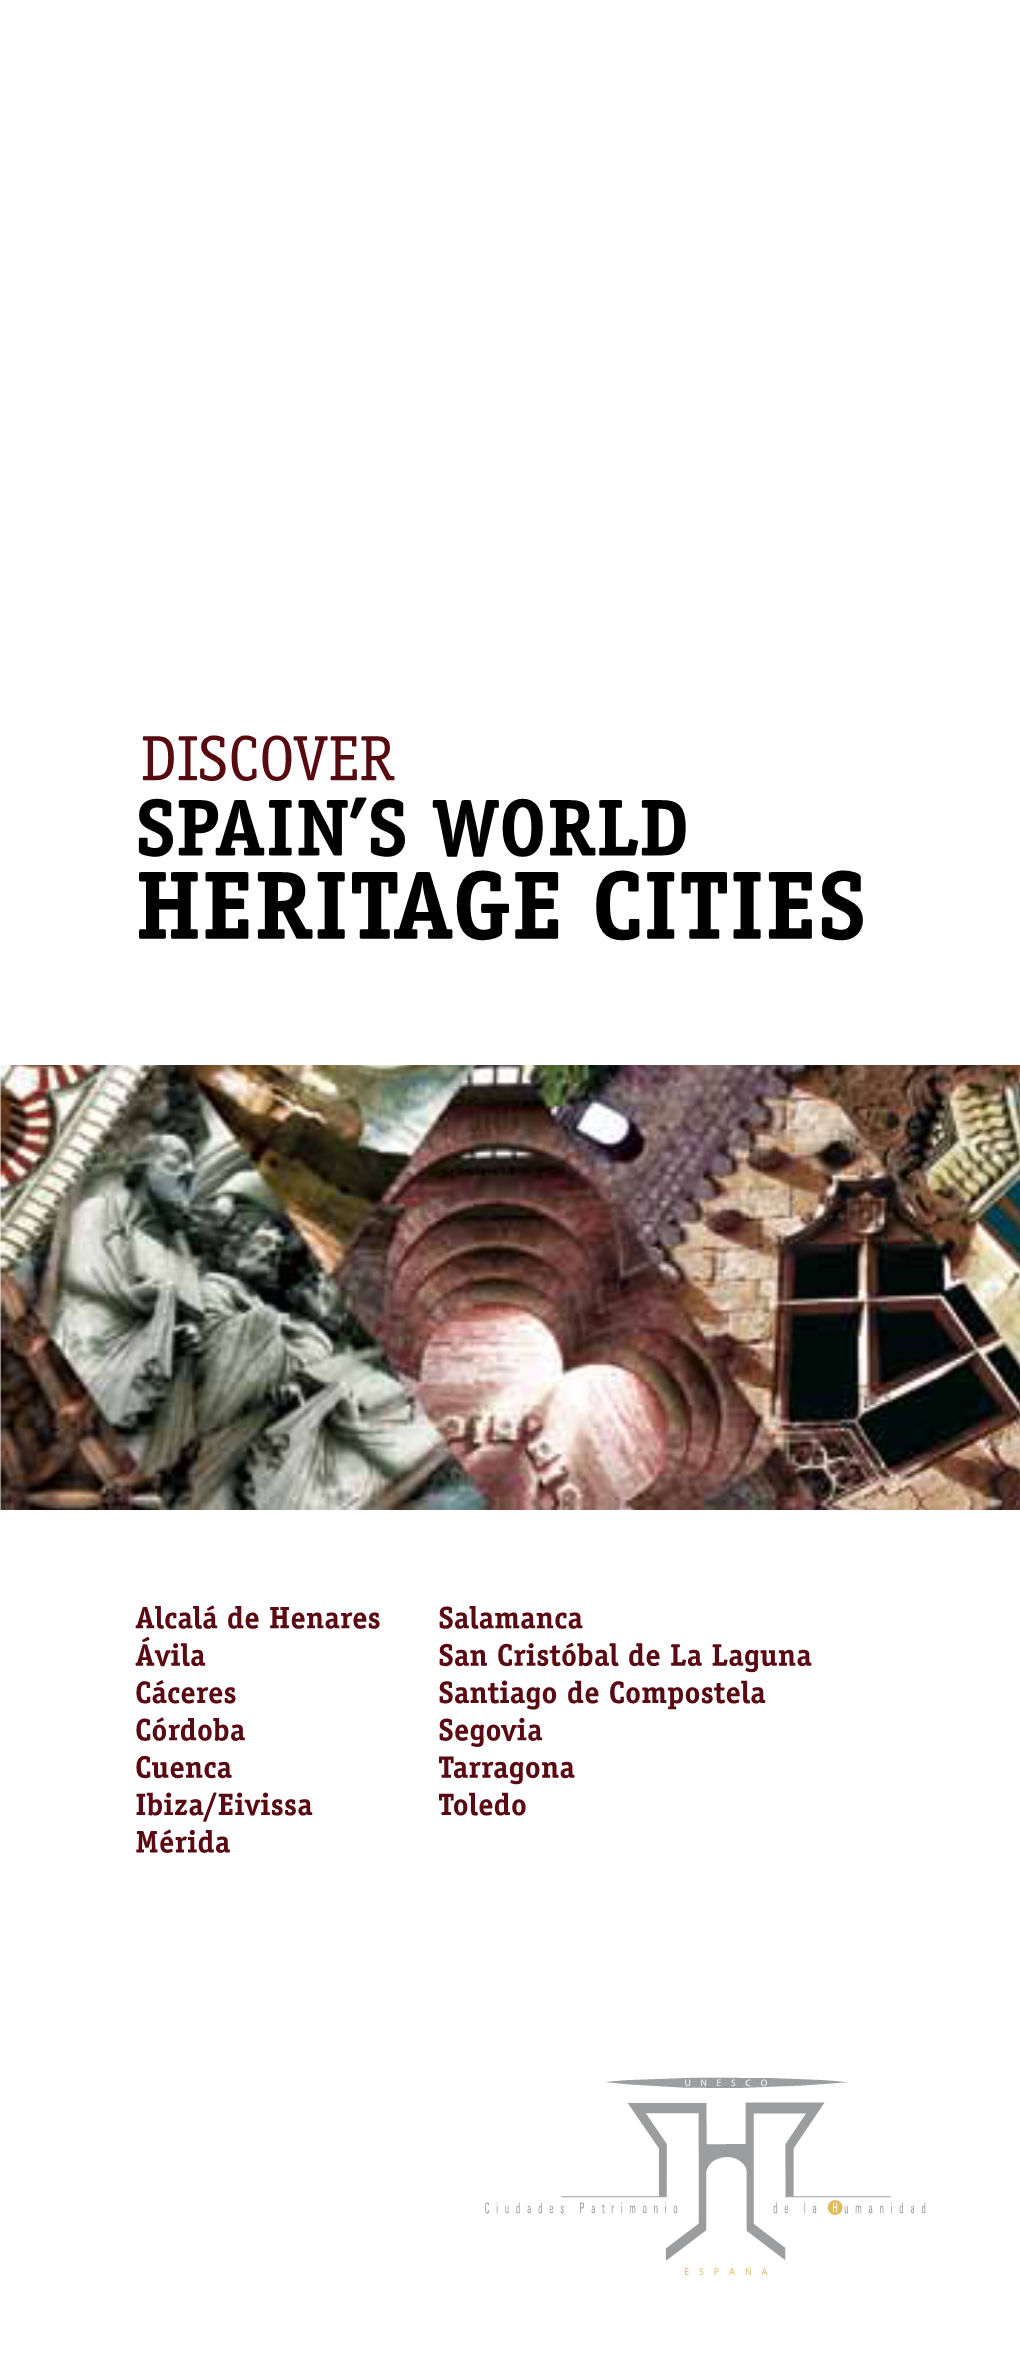 Heritage Cities